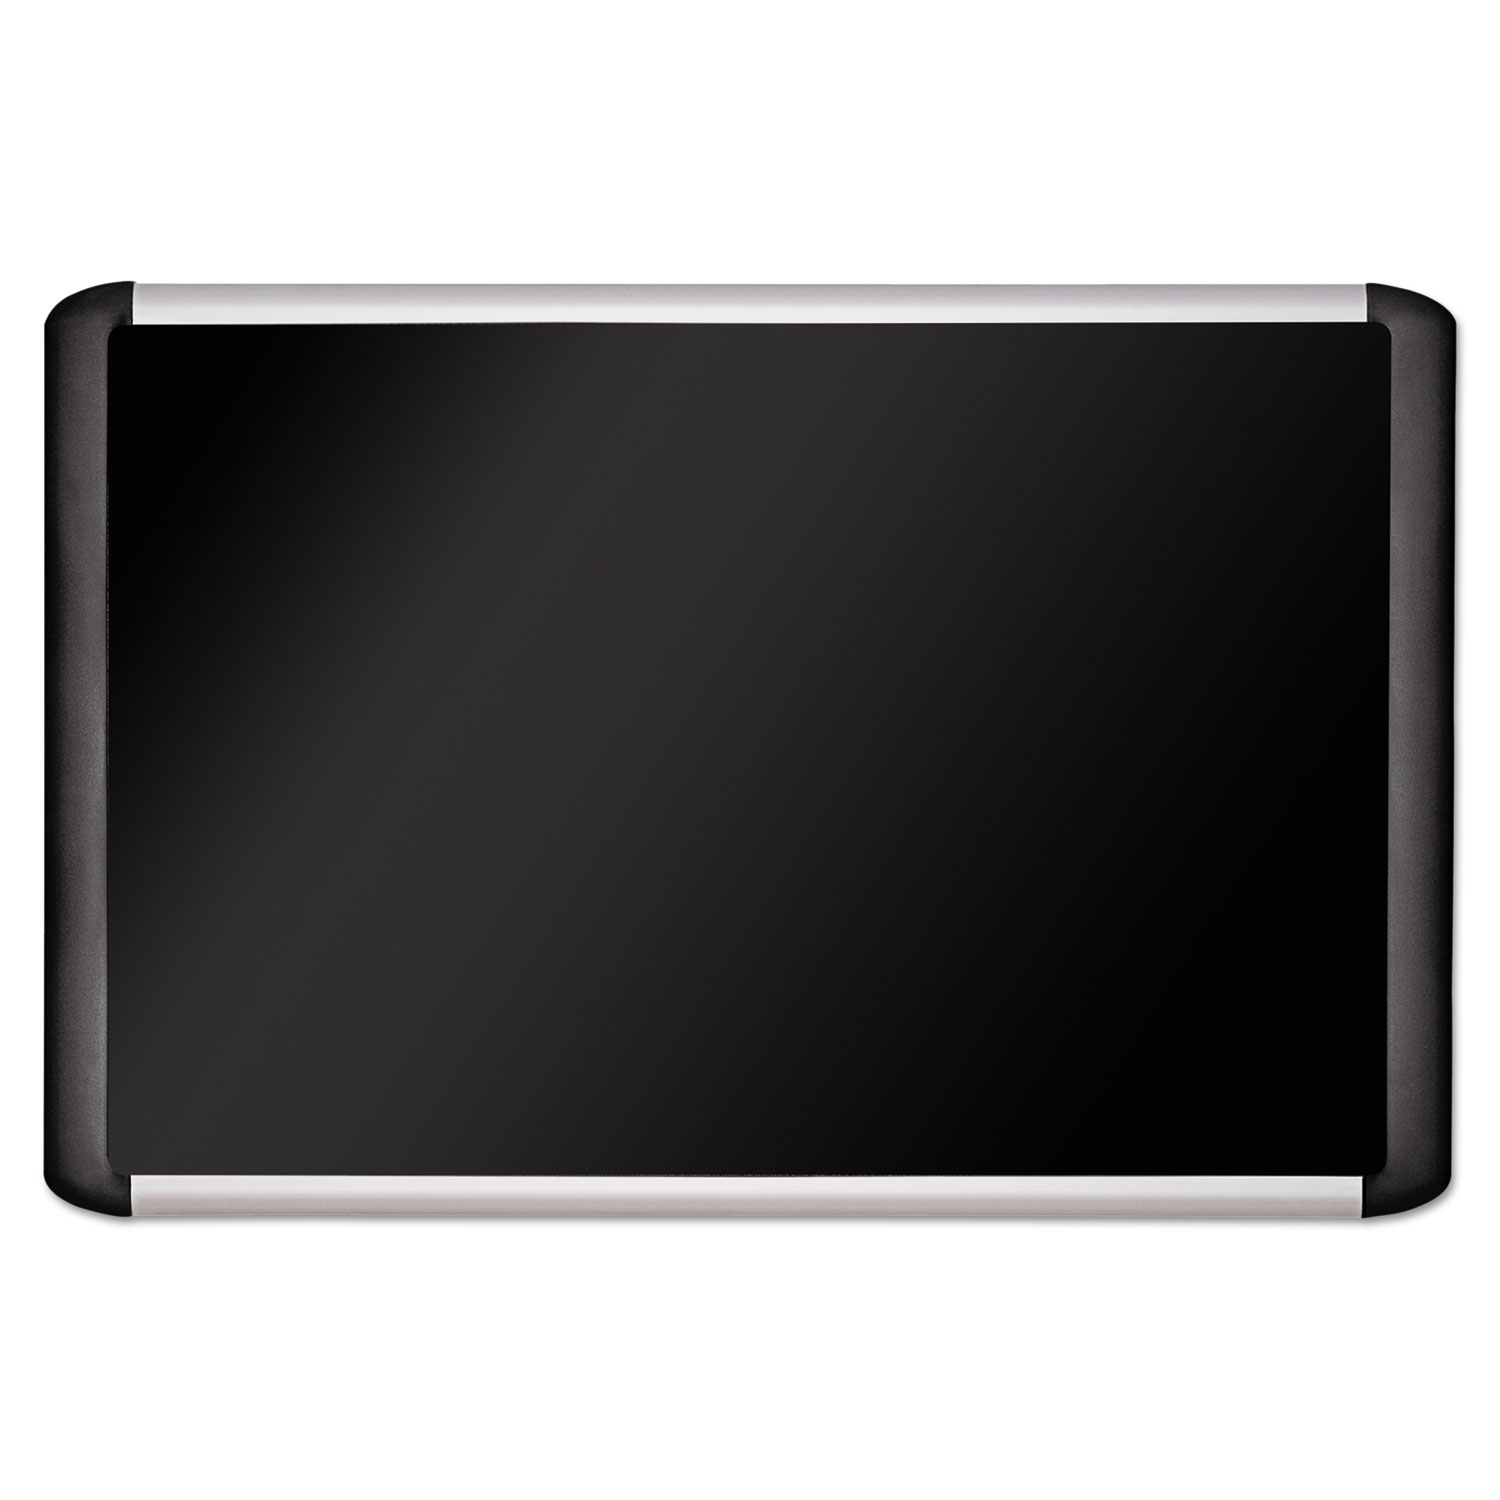  MasterVision MVI030301 Black fabric bulletin board, 24 x 36, Silver/Black (BVCMVI030301) 